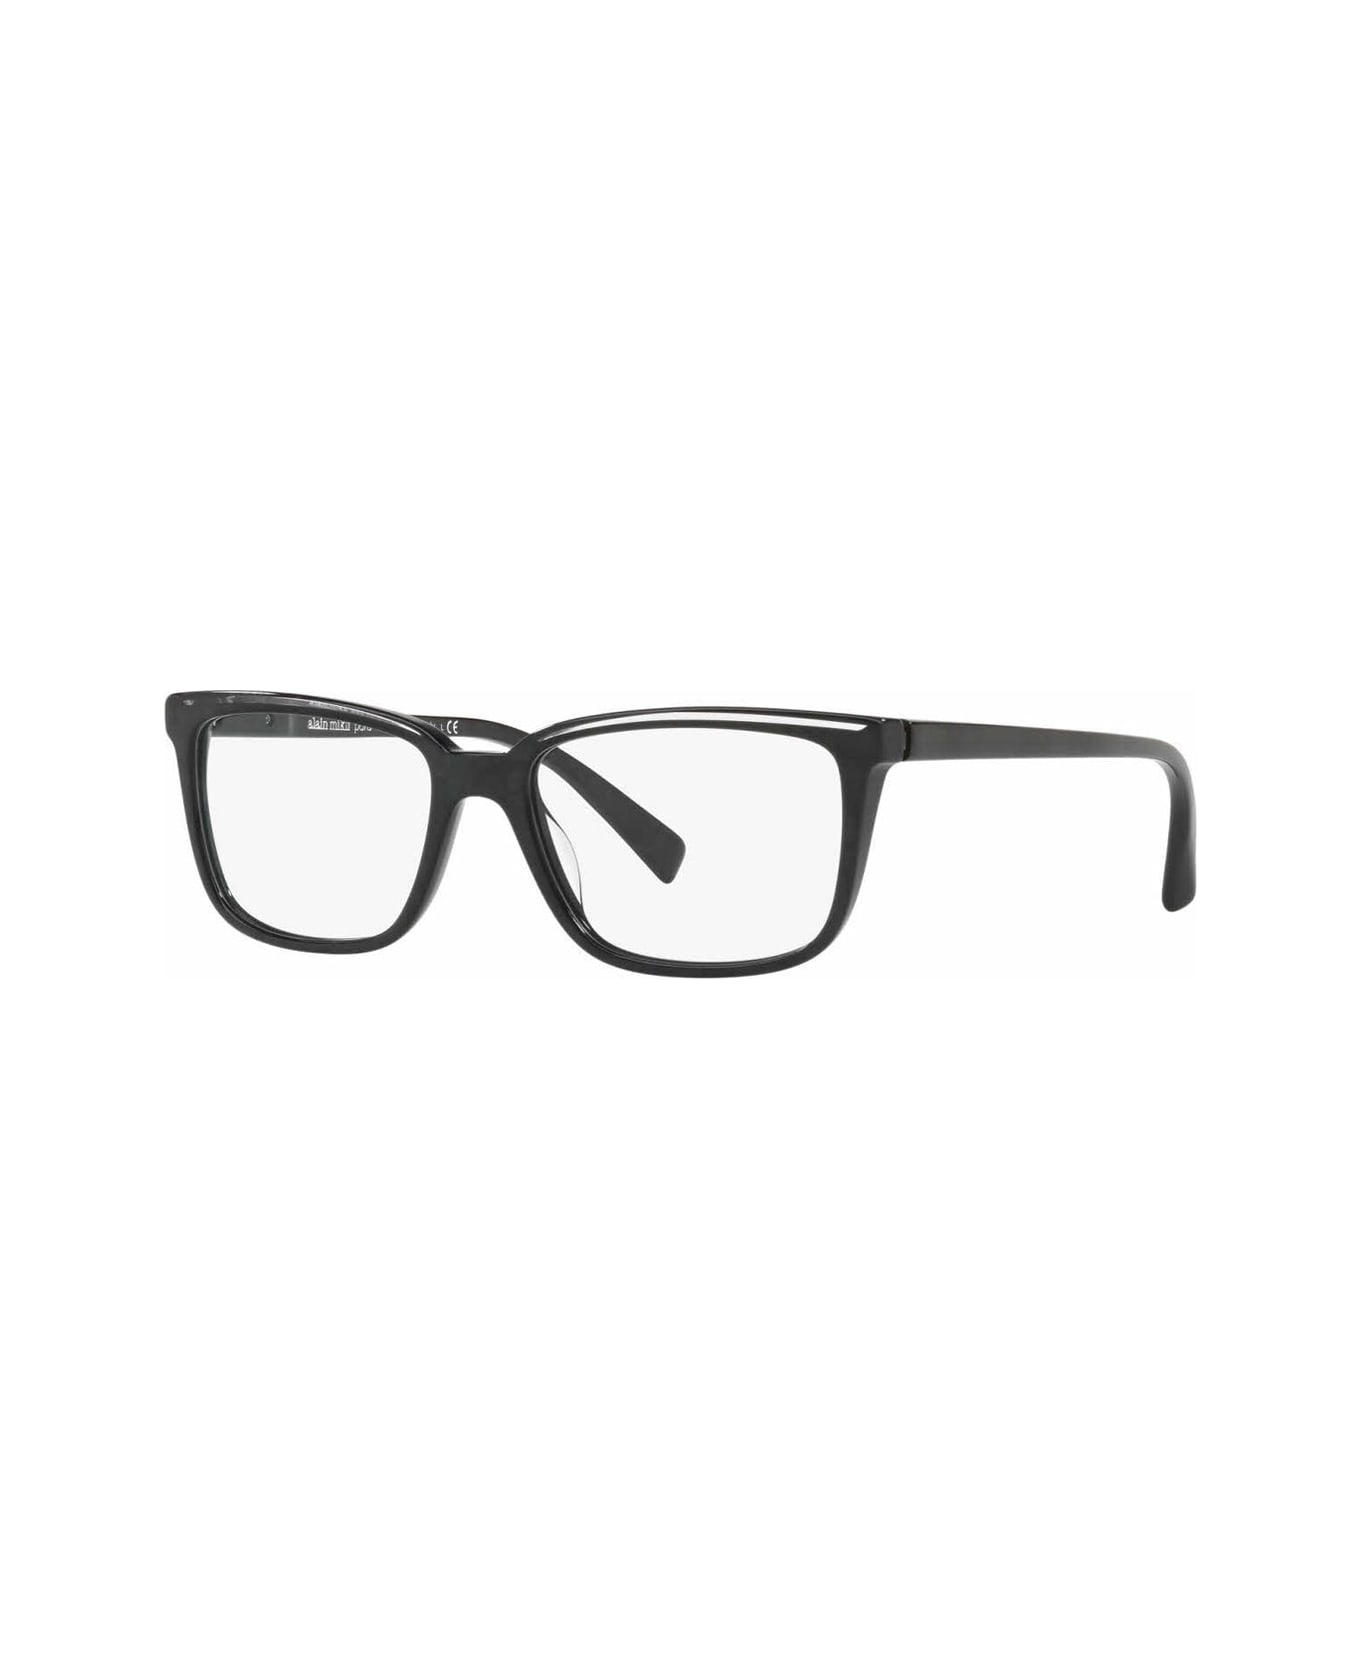 Alain Mikli A03079 Glasses - Nero アイウェア